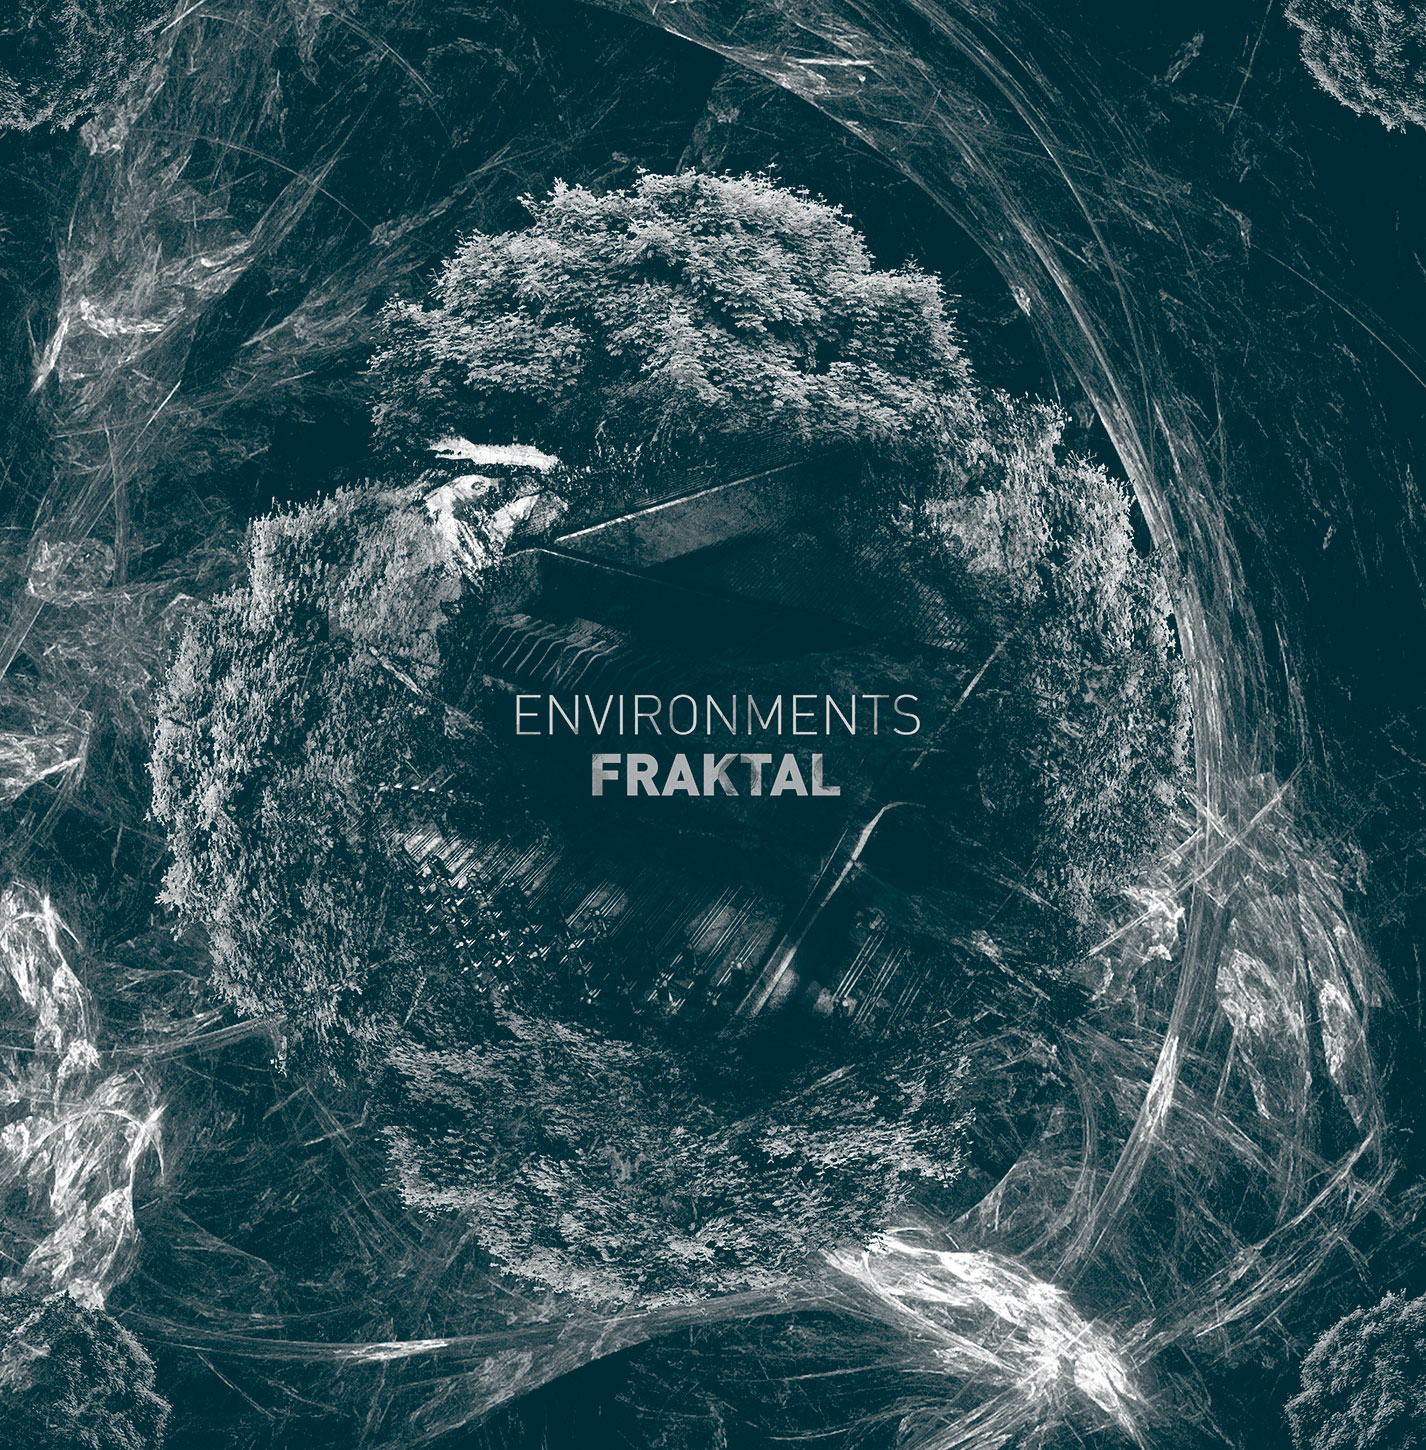 Environments announces details of their new album, Fraktal